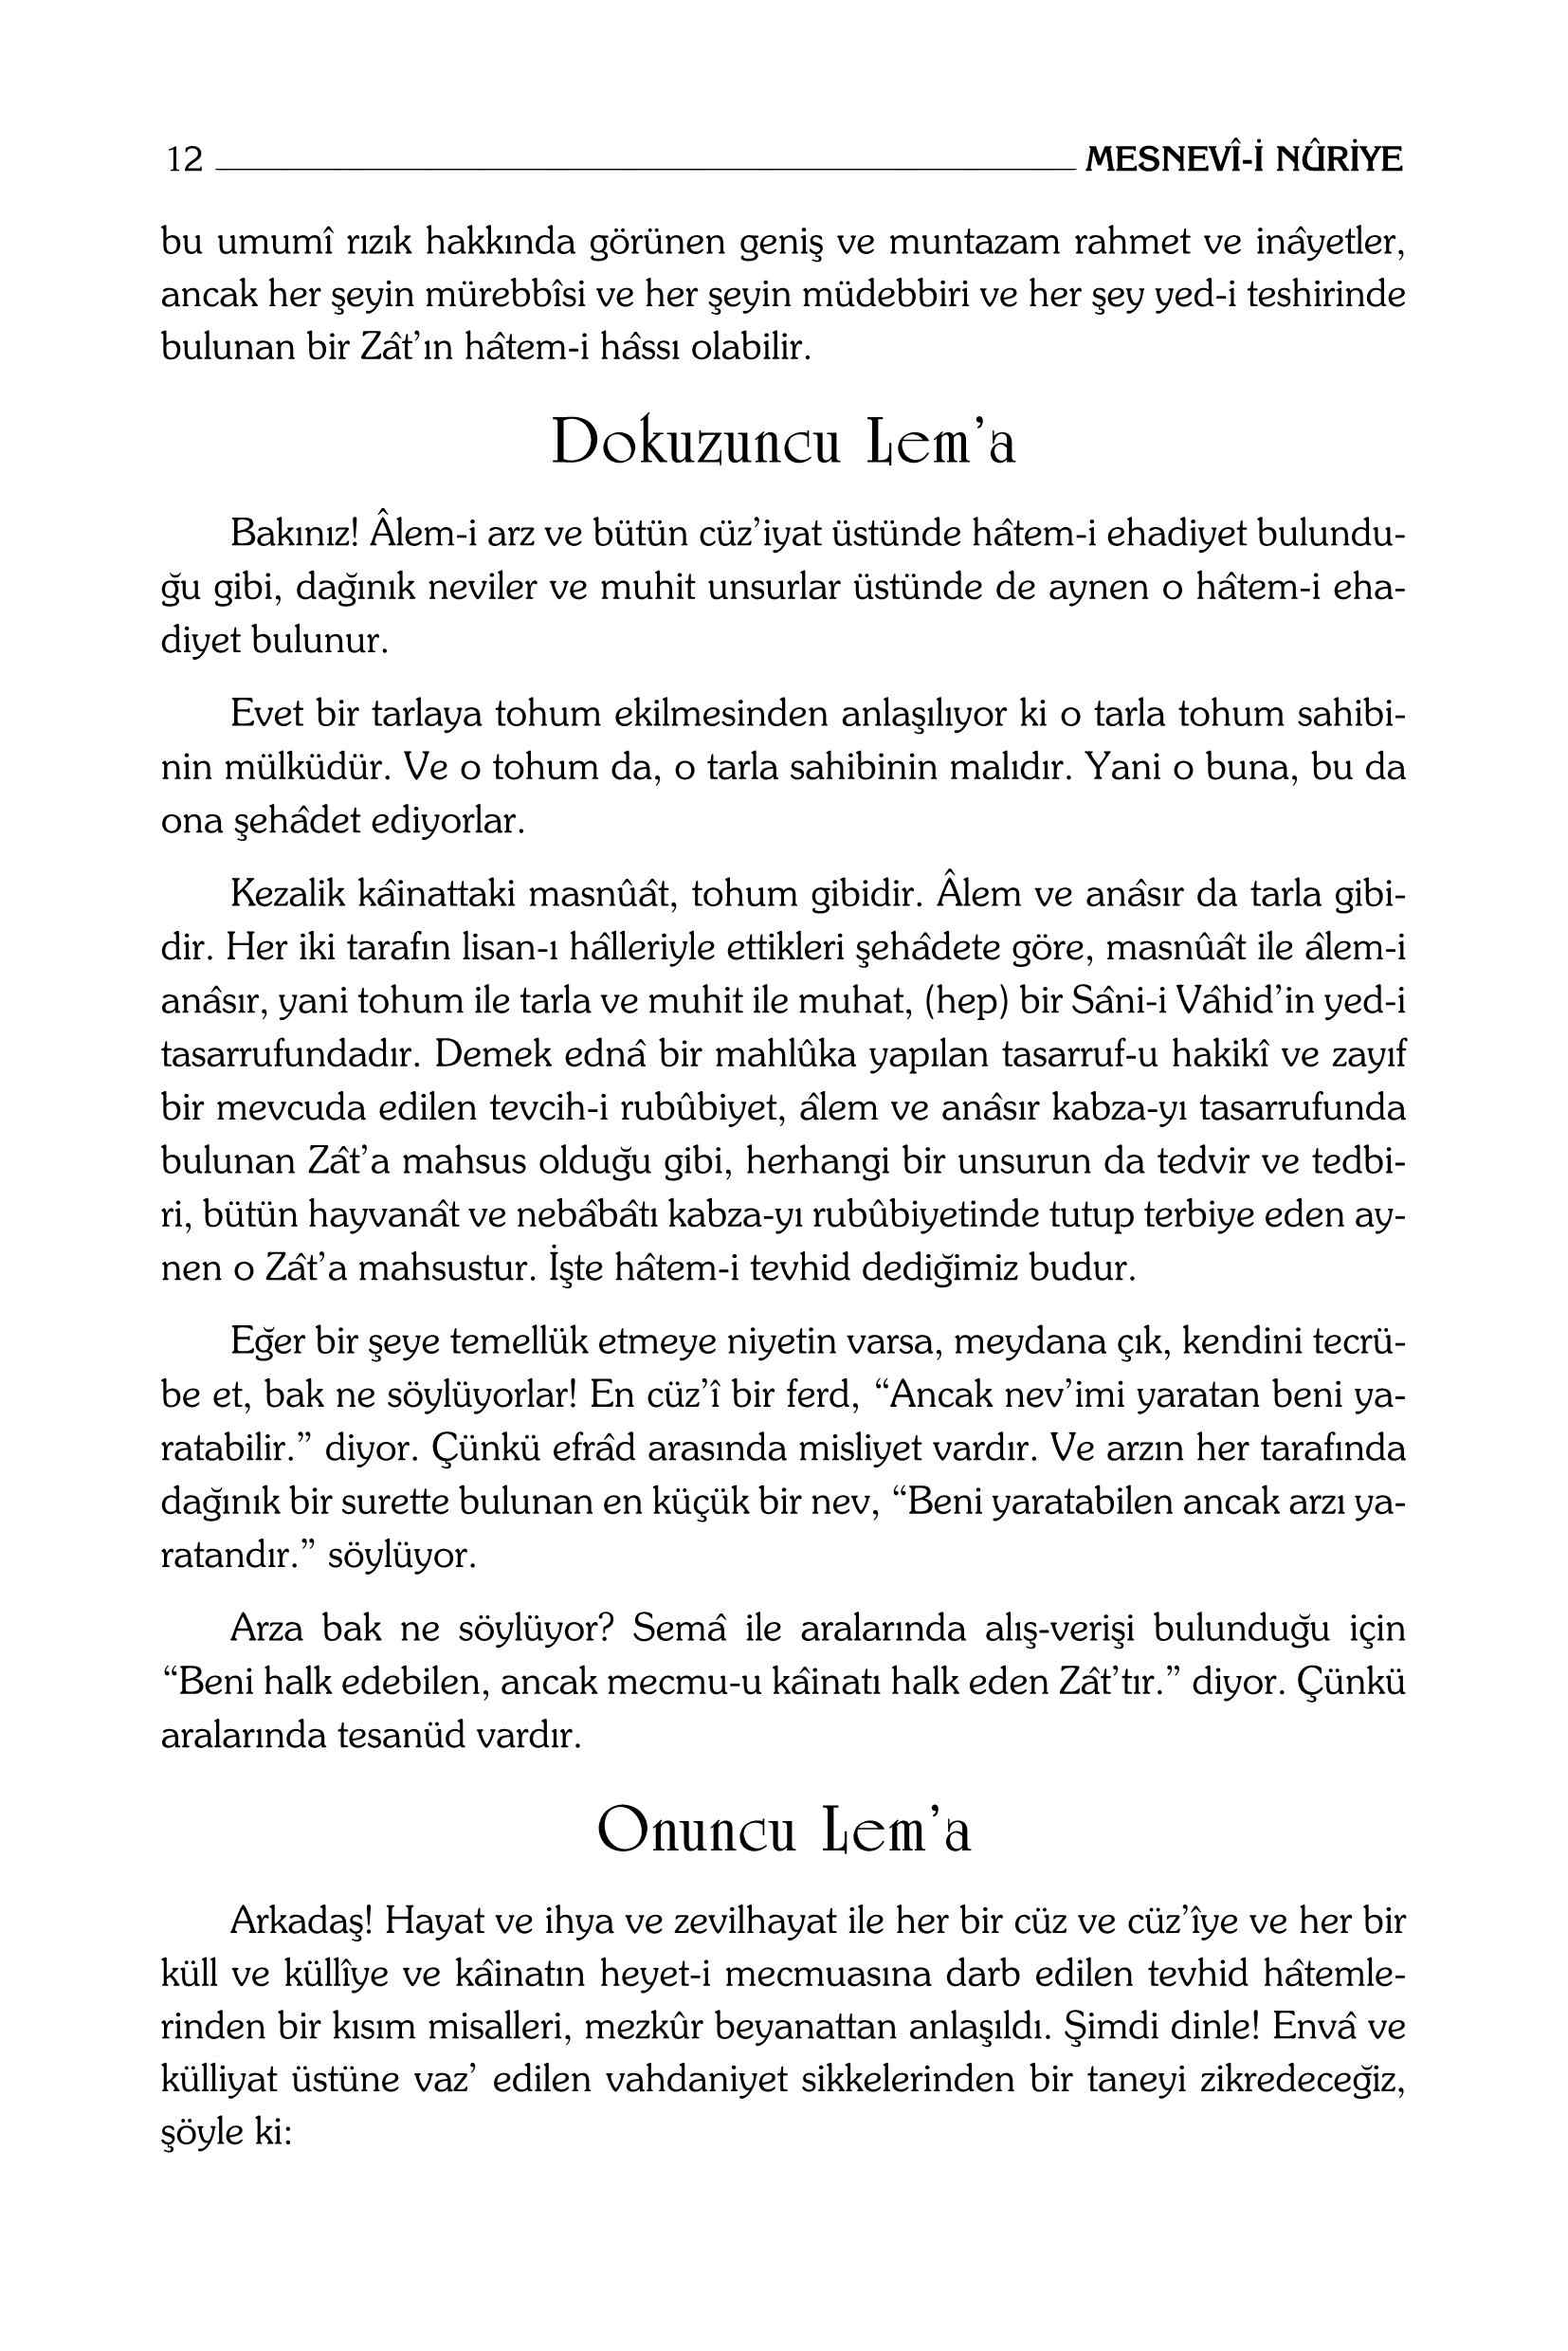 B Said Nursi - Mesnevi-i Nuriye - SahdamarY.pdf, 265-Sayfa 